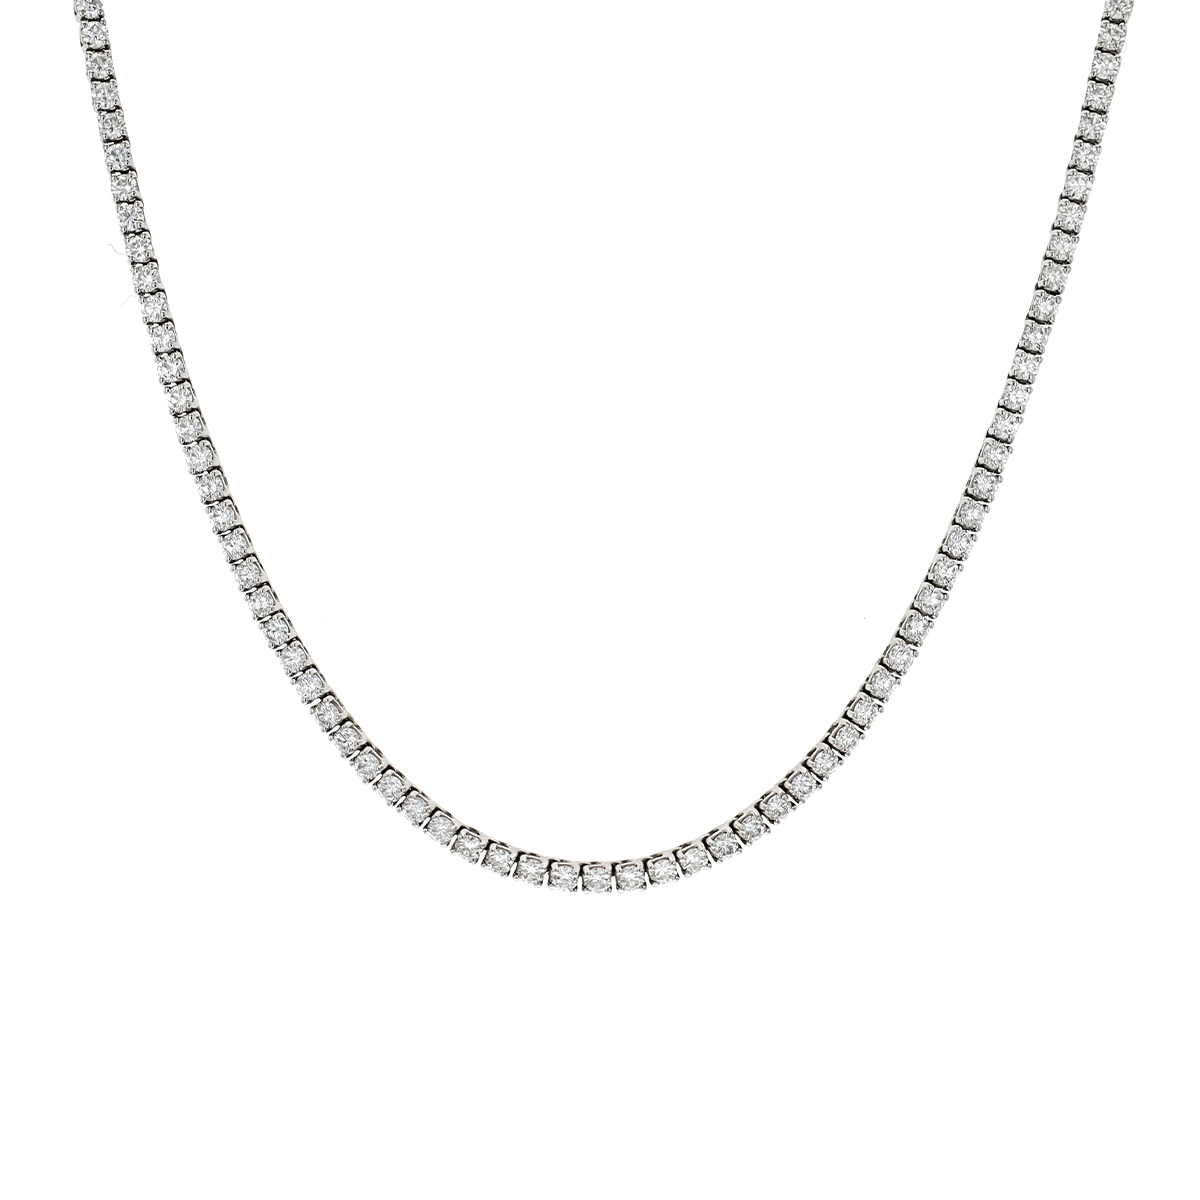 14K White Gold 11.64 Carat Diamond Necklace